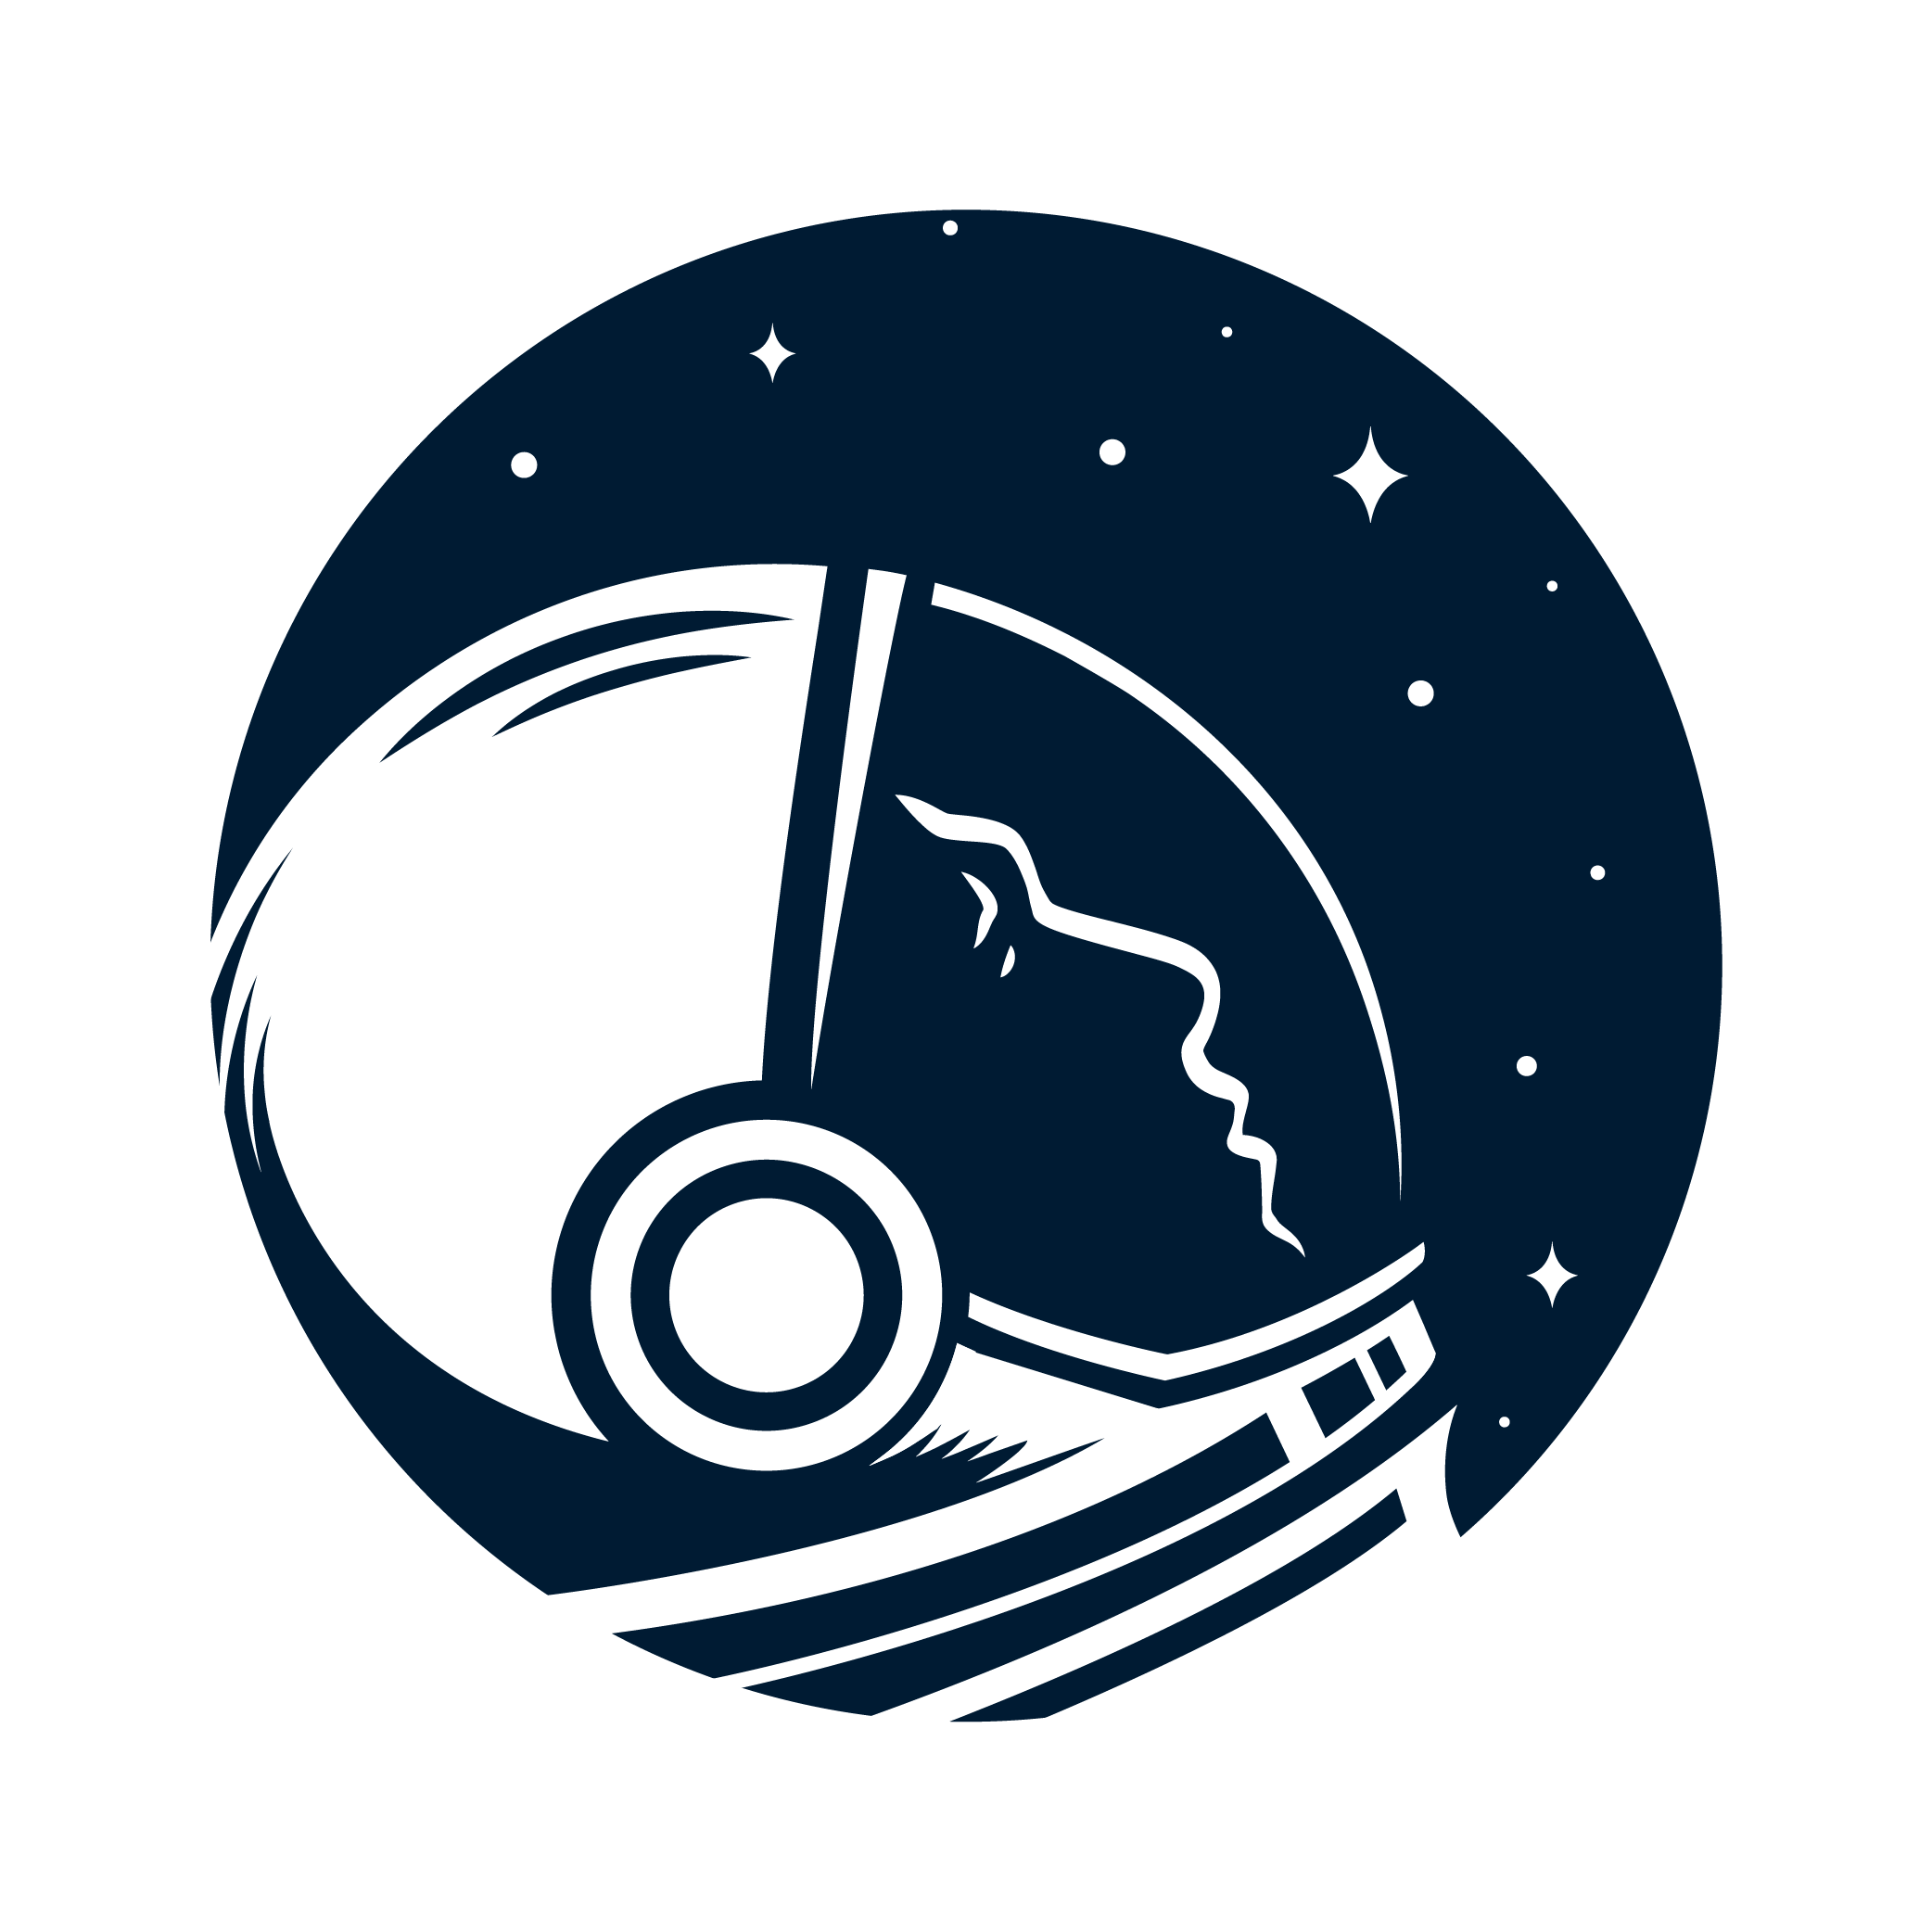 MetaSpacecy logo